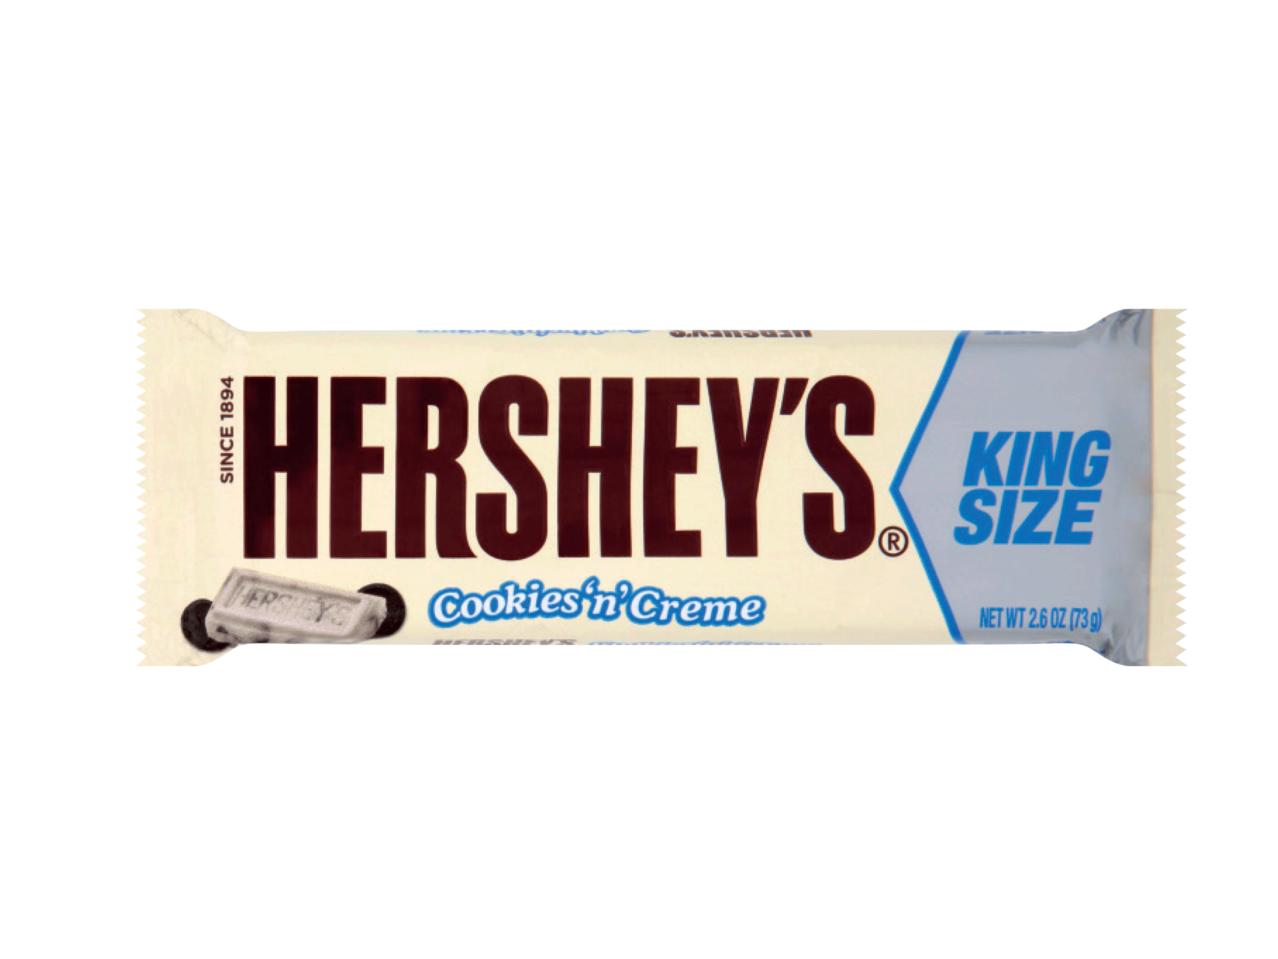 HERSHEY'S(R) Cookies ‘n' Cream Kingsize Bar